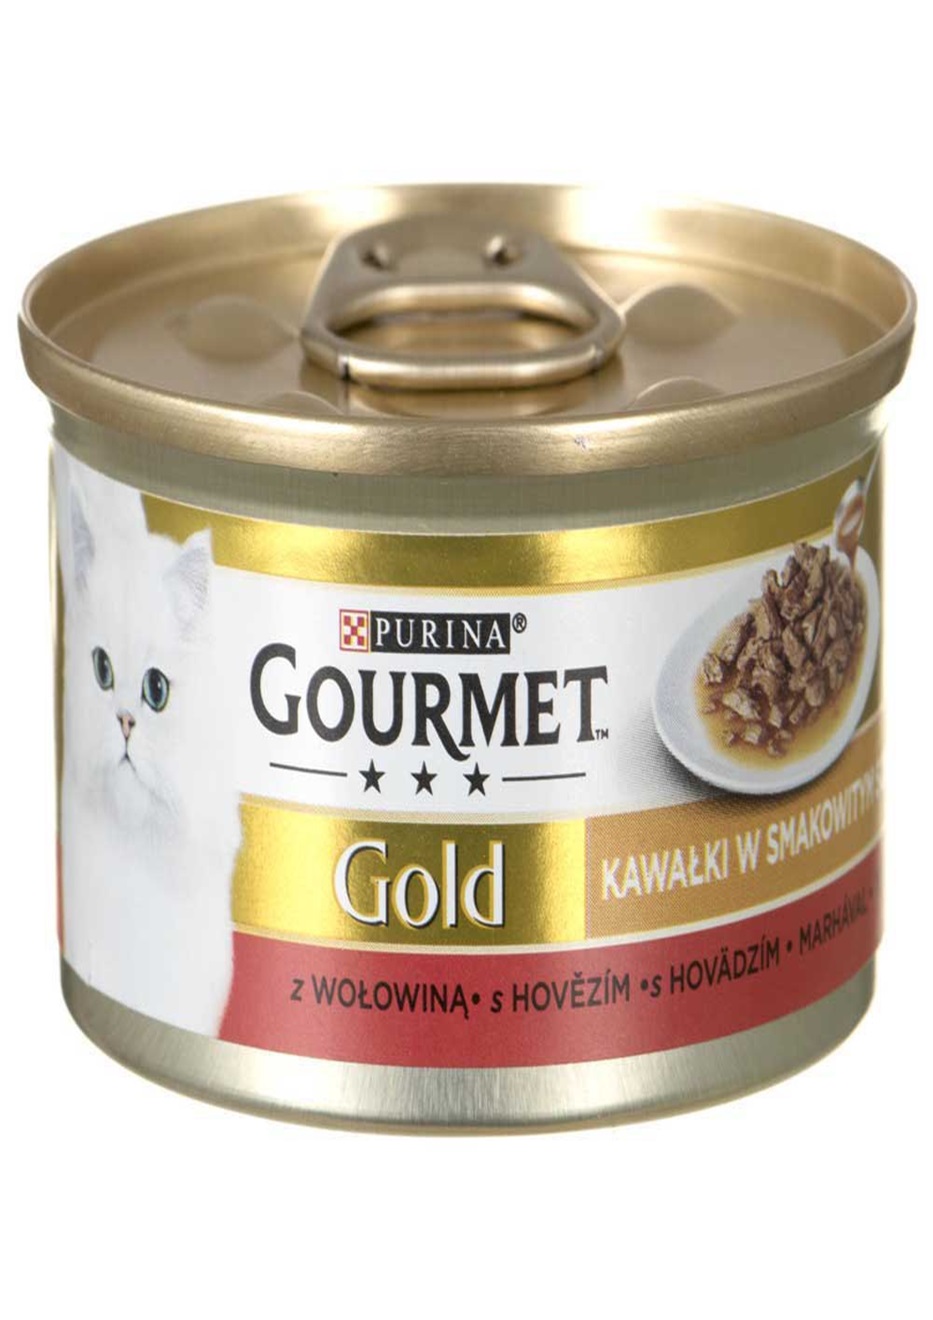 کنسرو پته گربه گورمت گلد طعم گوشت 85 گرمی | Gourmet Gold Beef Cat